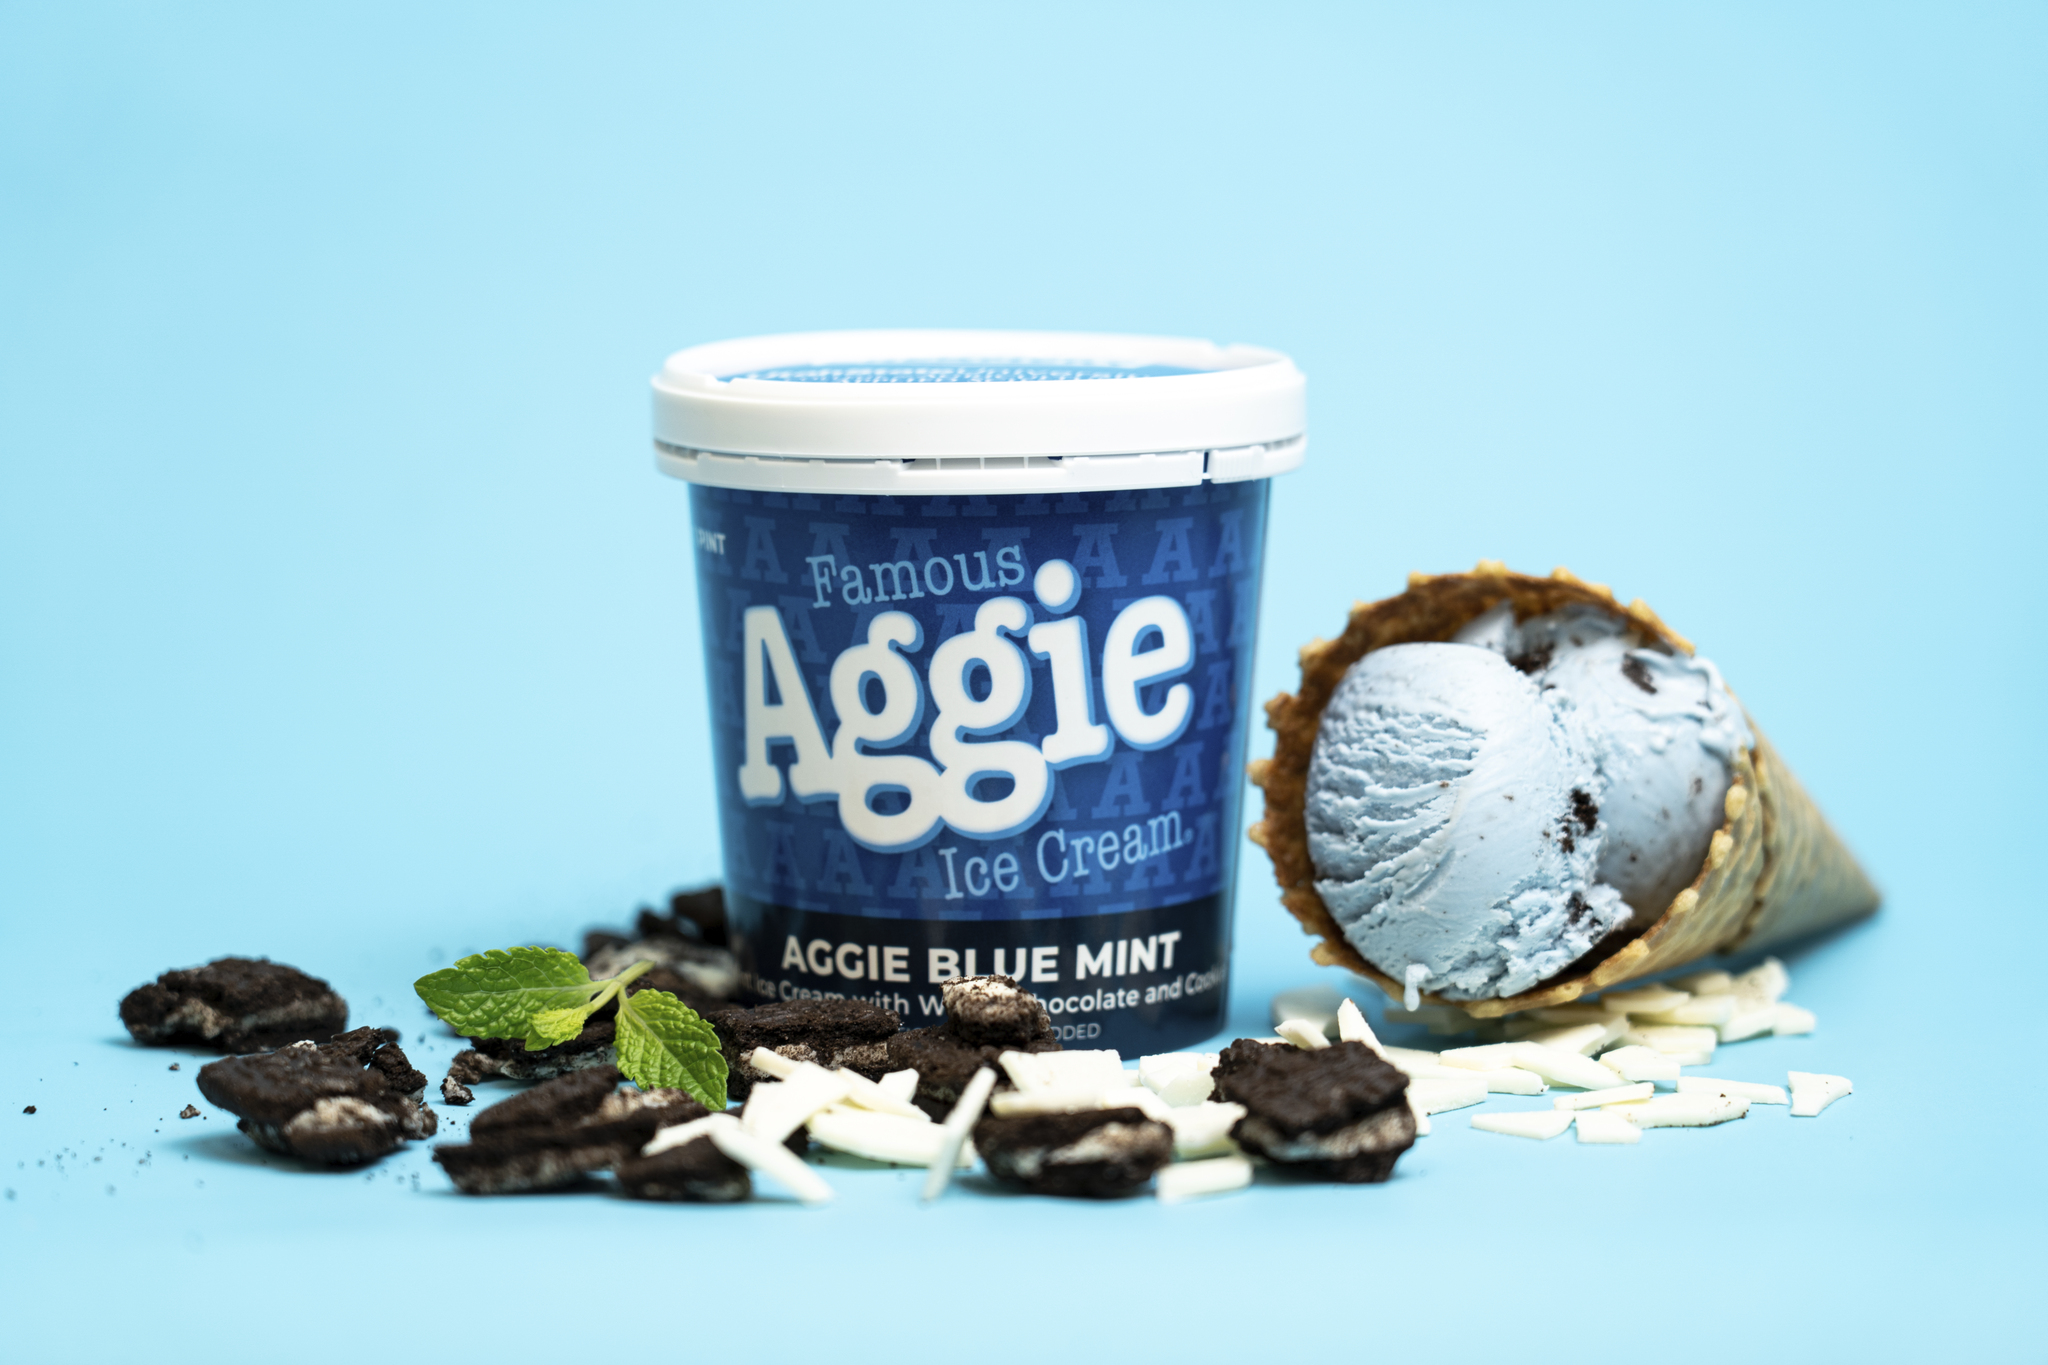 Aggie Blue Mint Ice Cream